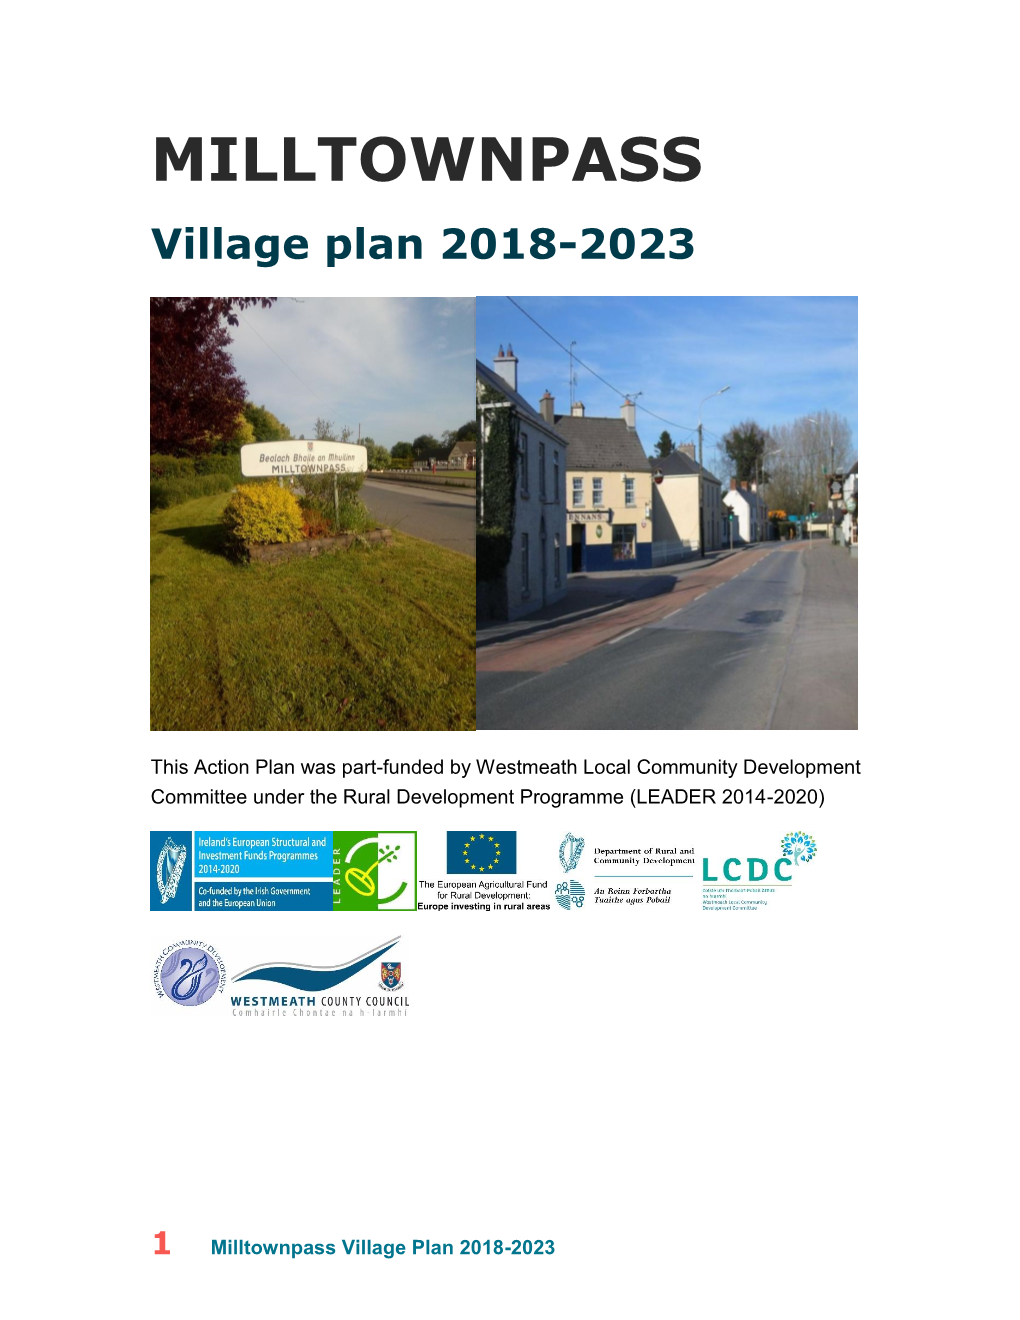 MILLTOWNPASS Village Plan 2018-2023